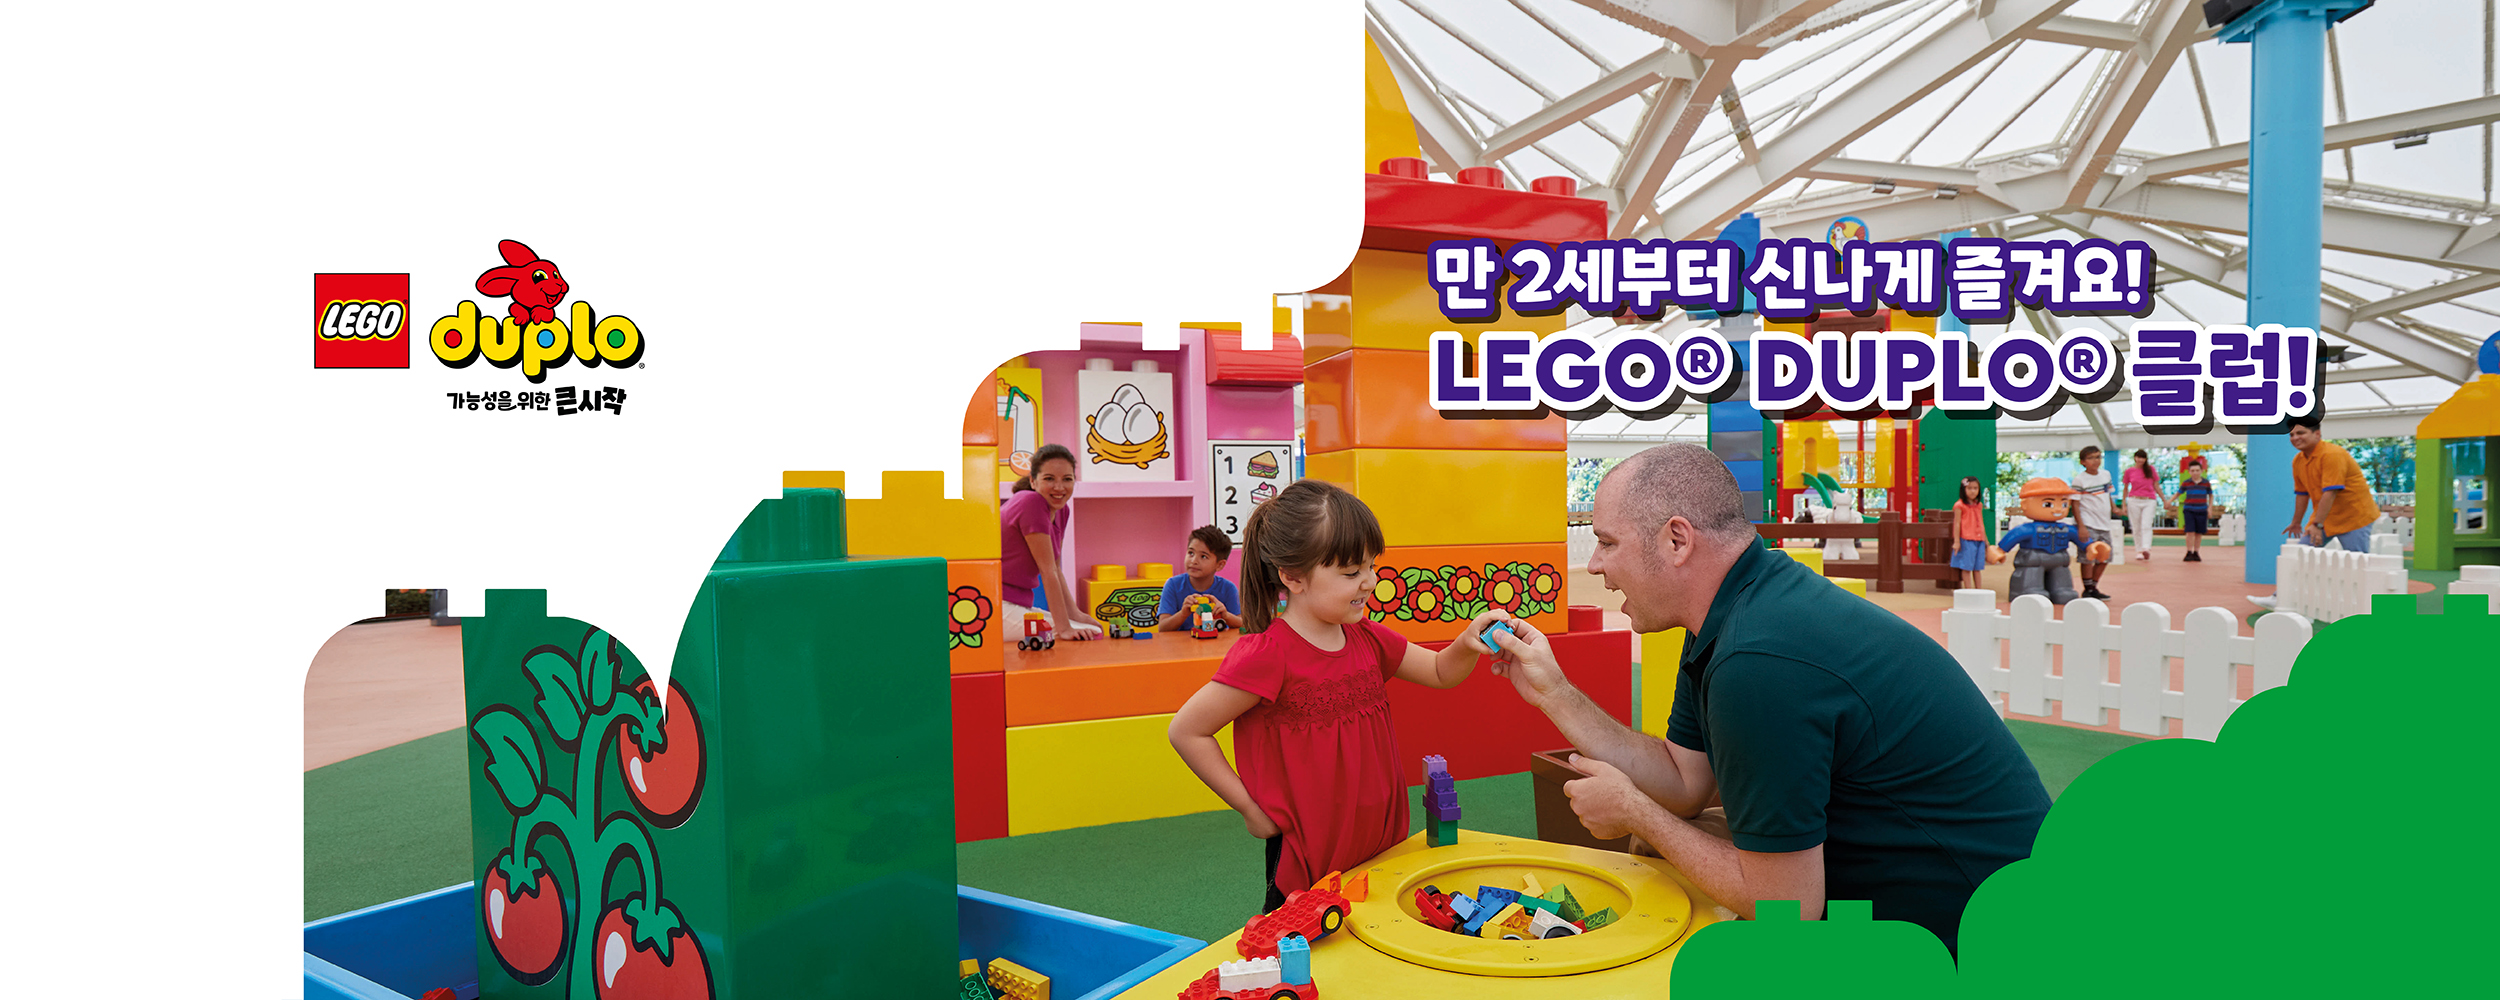 Legoland® Korea Resort